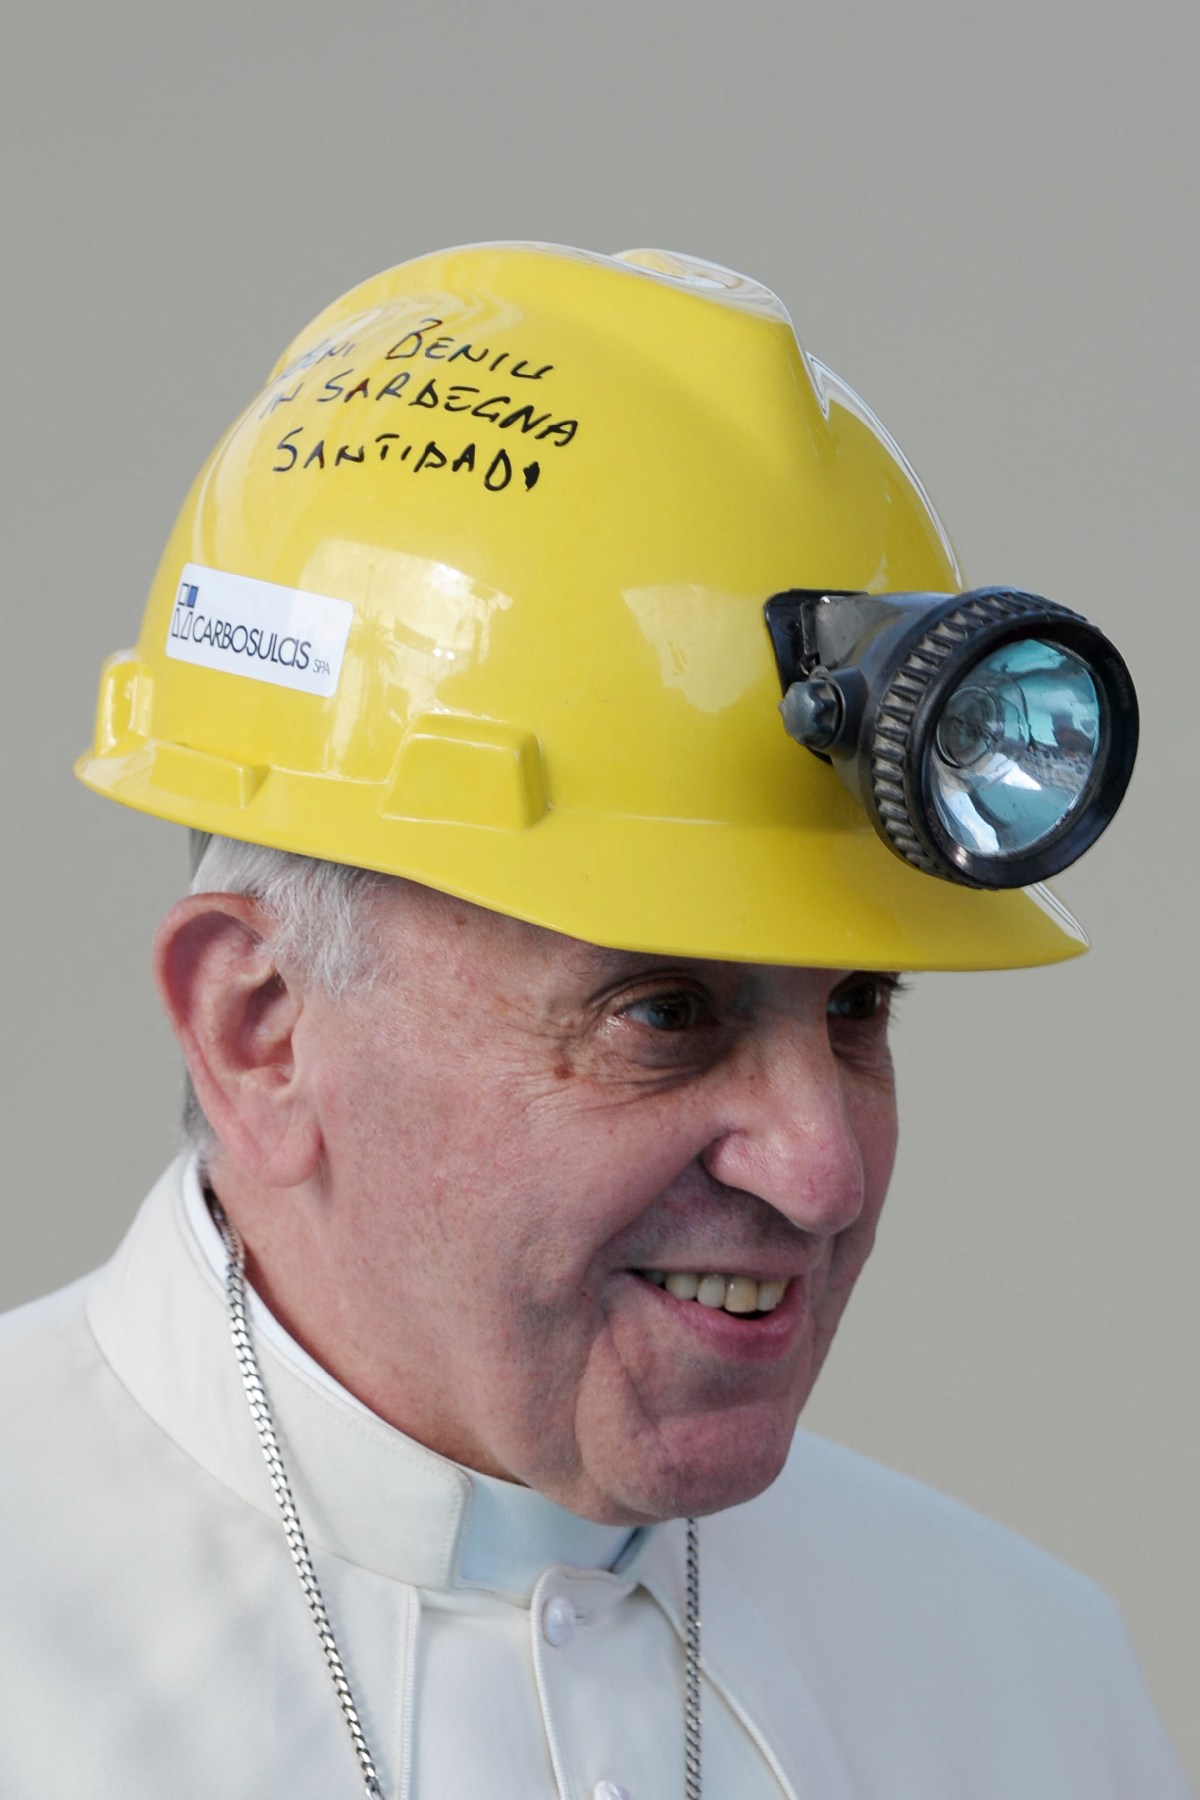 (Slideshow) Pope Francis travels